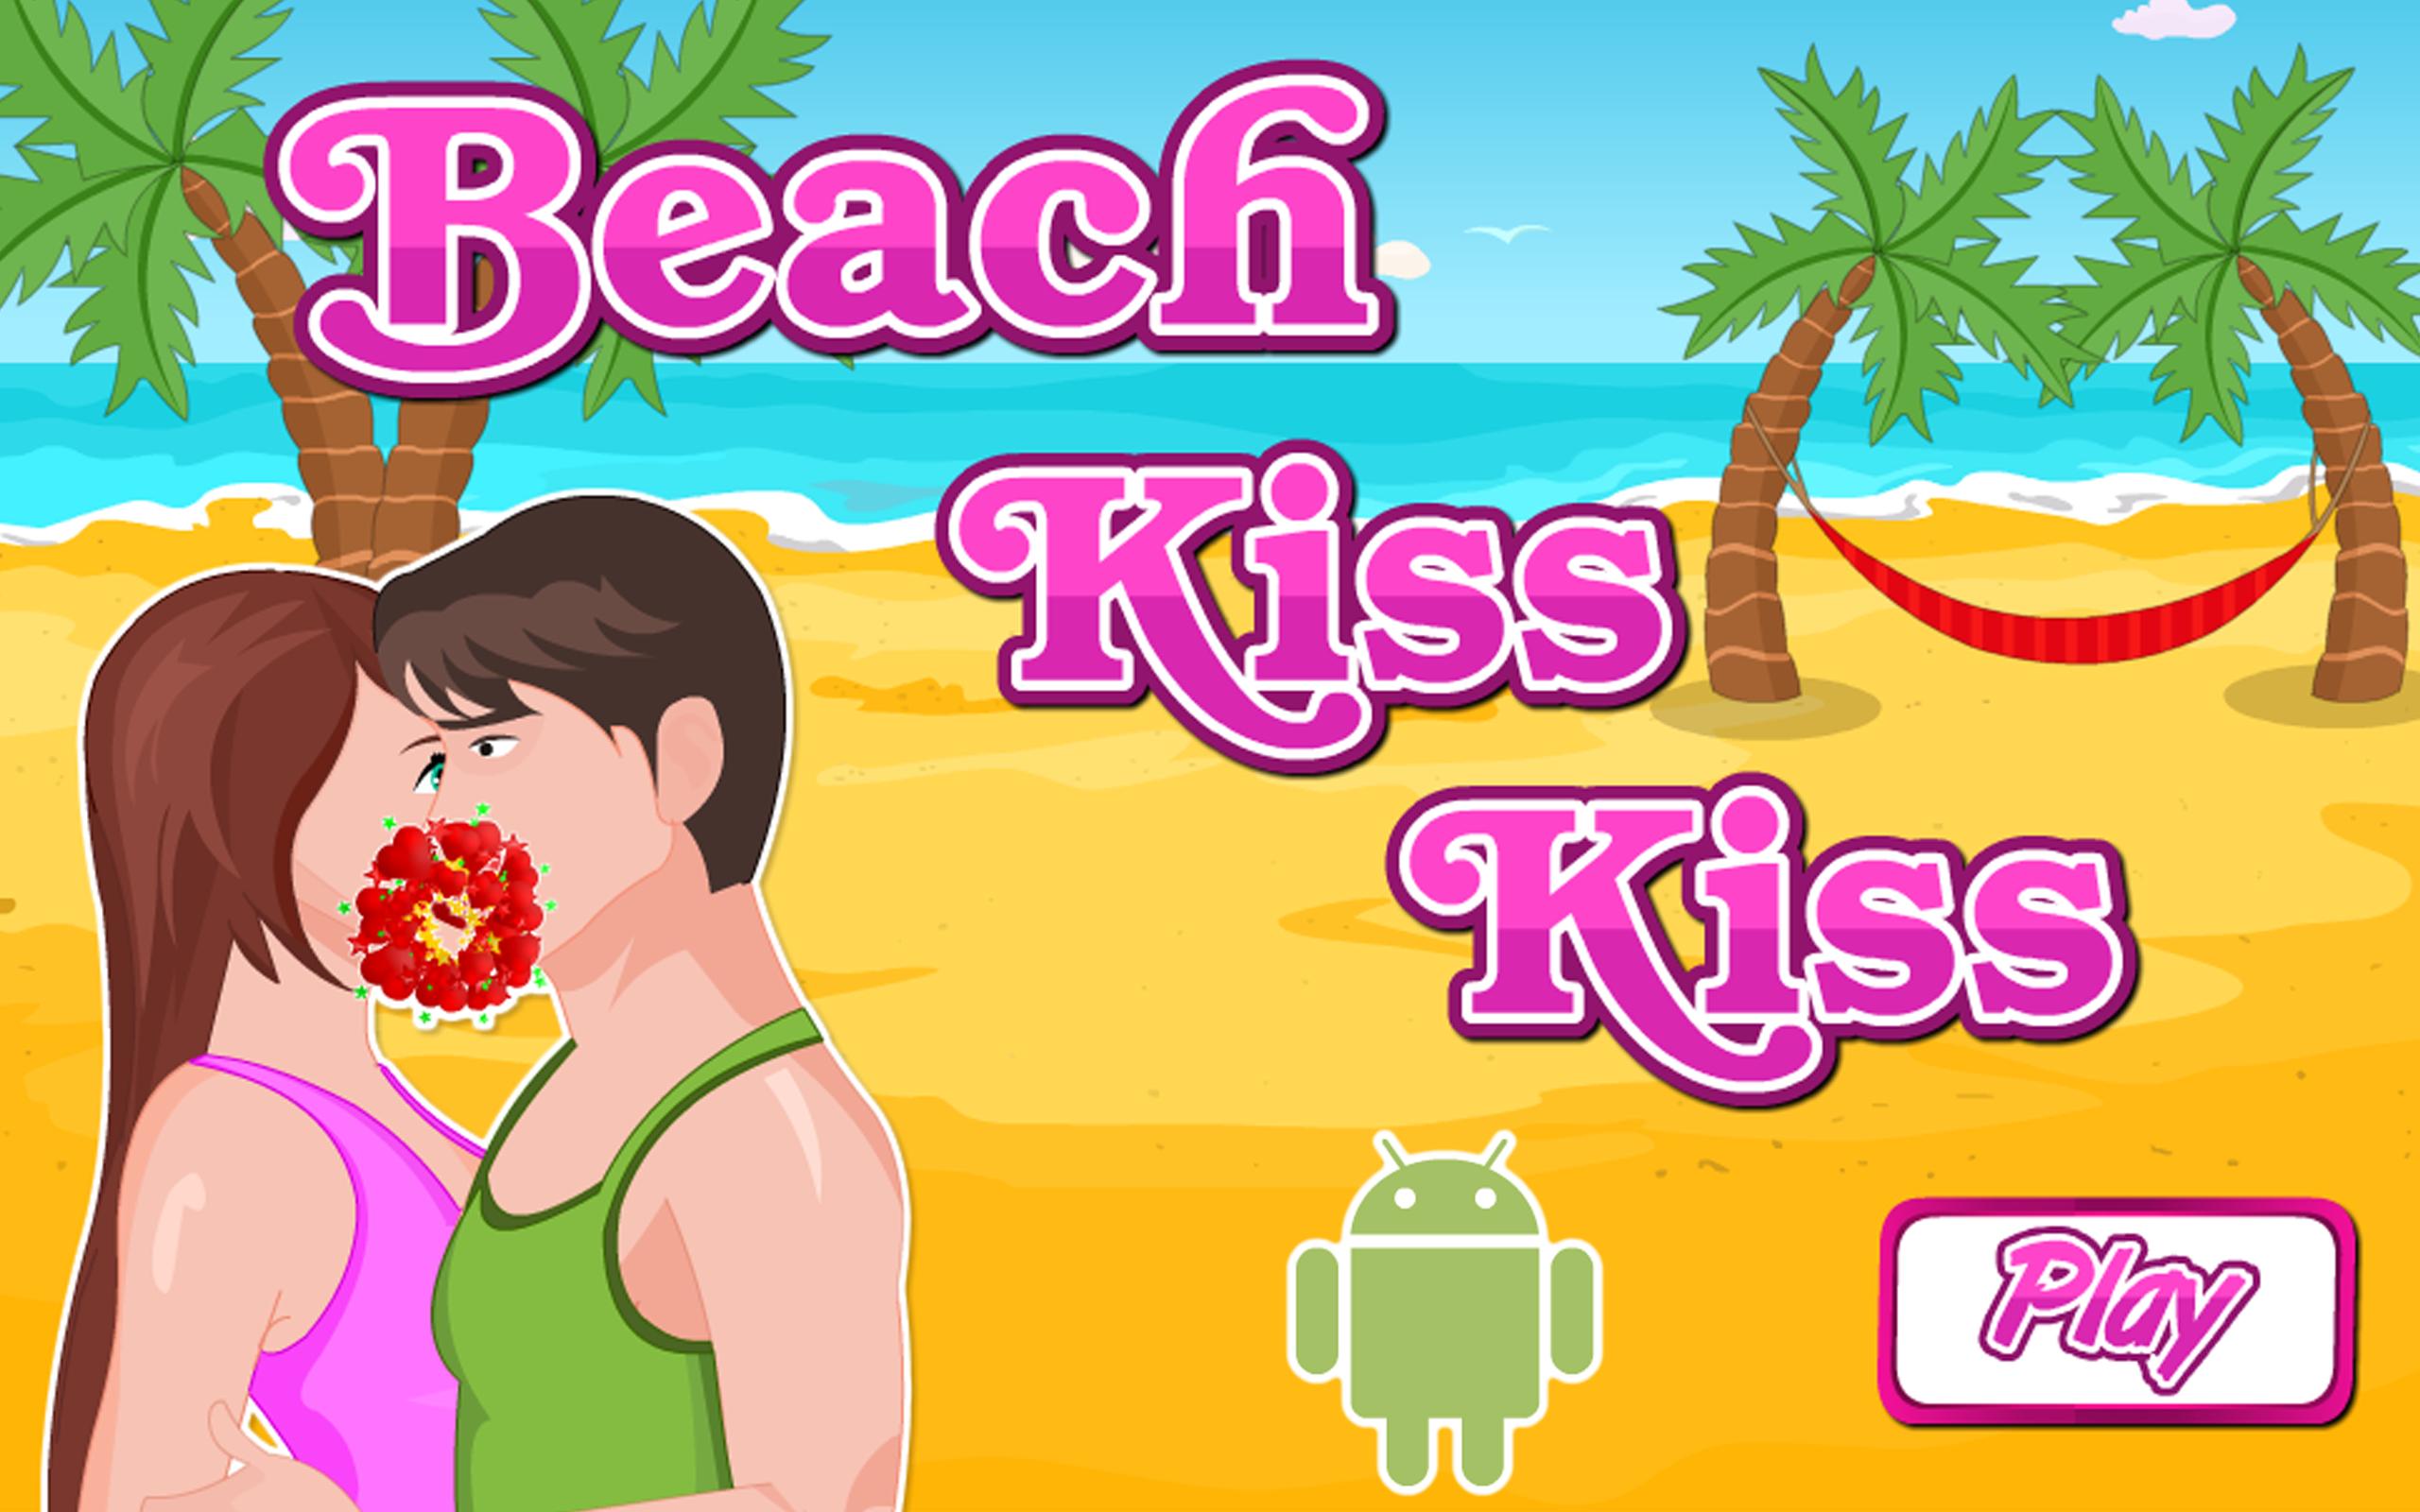 Kiss my game. Игра поцелуйчики. Игра поцелуй на пляже. Игра пляж поцелуй поцелуй. Игра Beach Kiss.